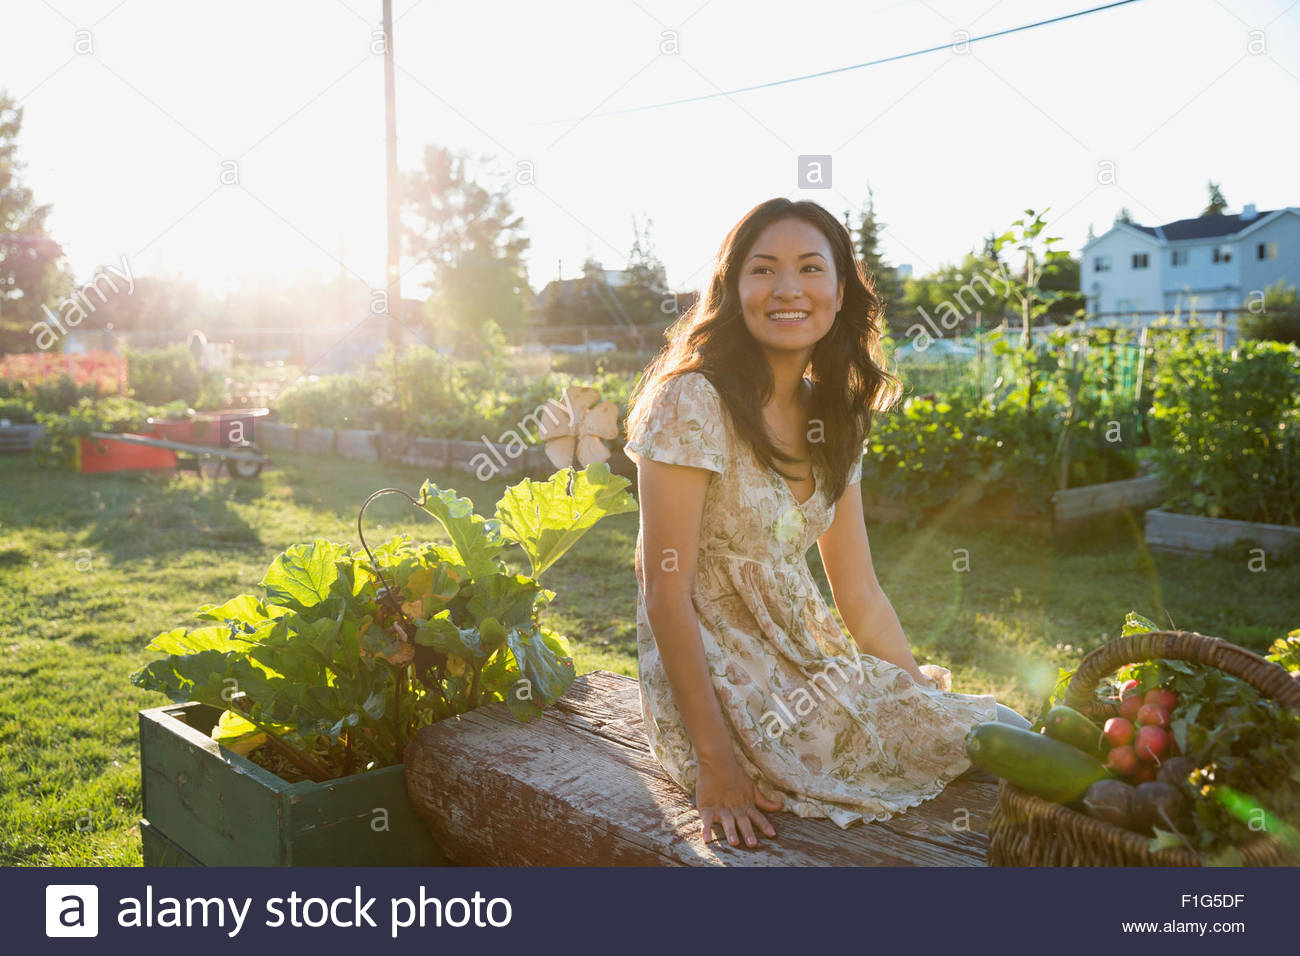 La cueillette des légumes Smiling teenage girl in garden Banque D'Images